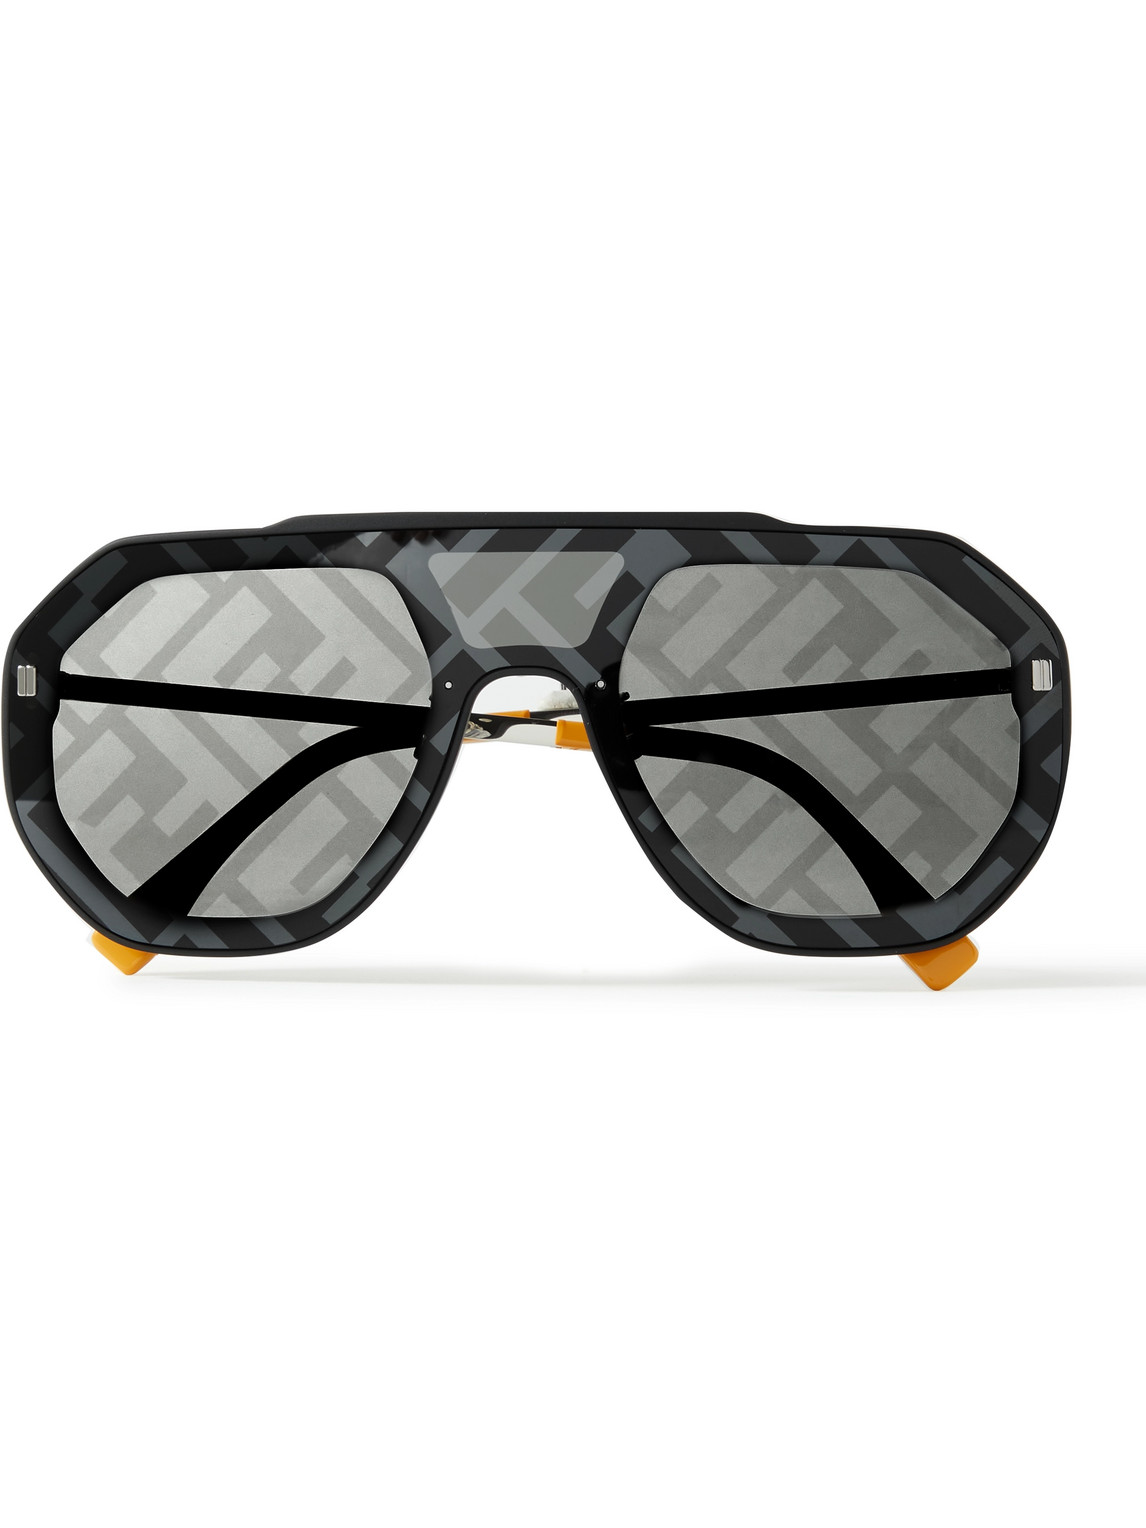 Aviator-Style Logo-Print Silver-Tone and Acetate Sunglasses